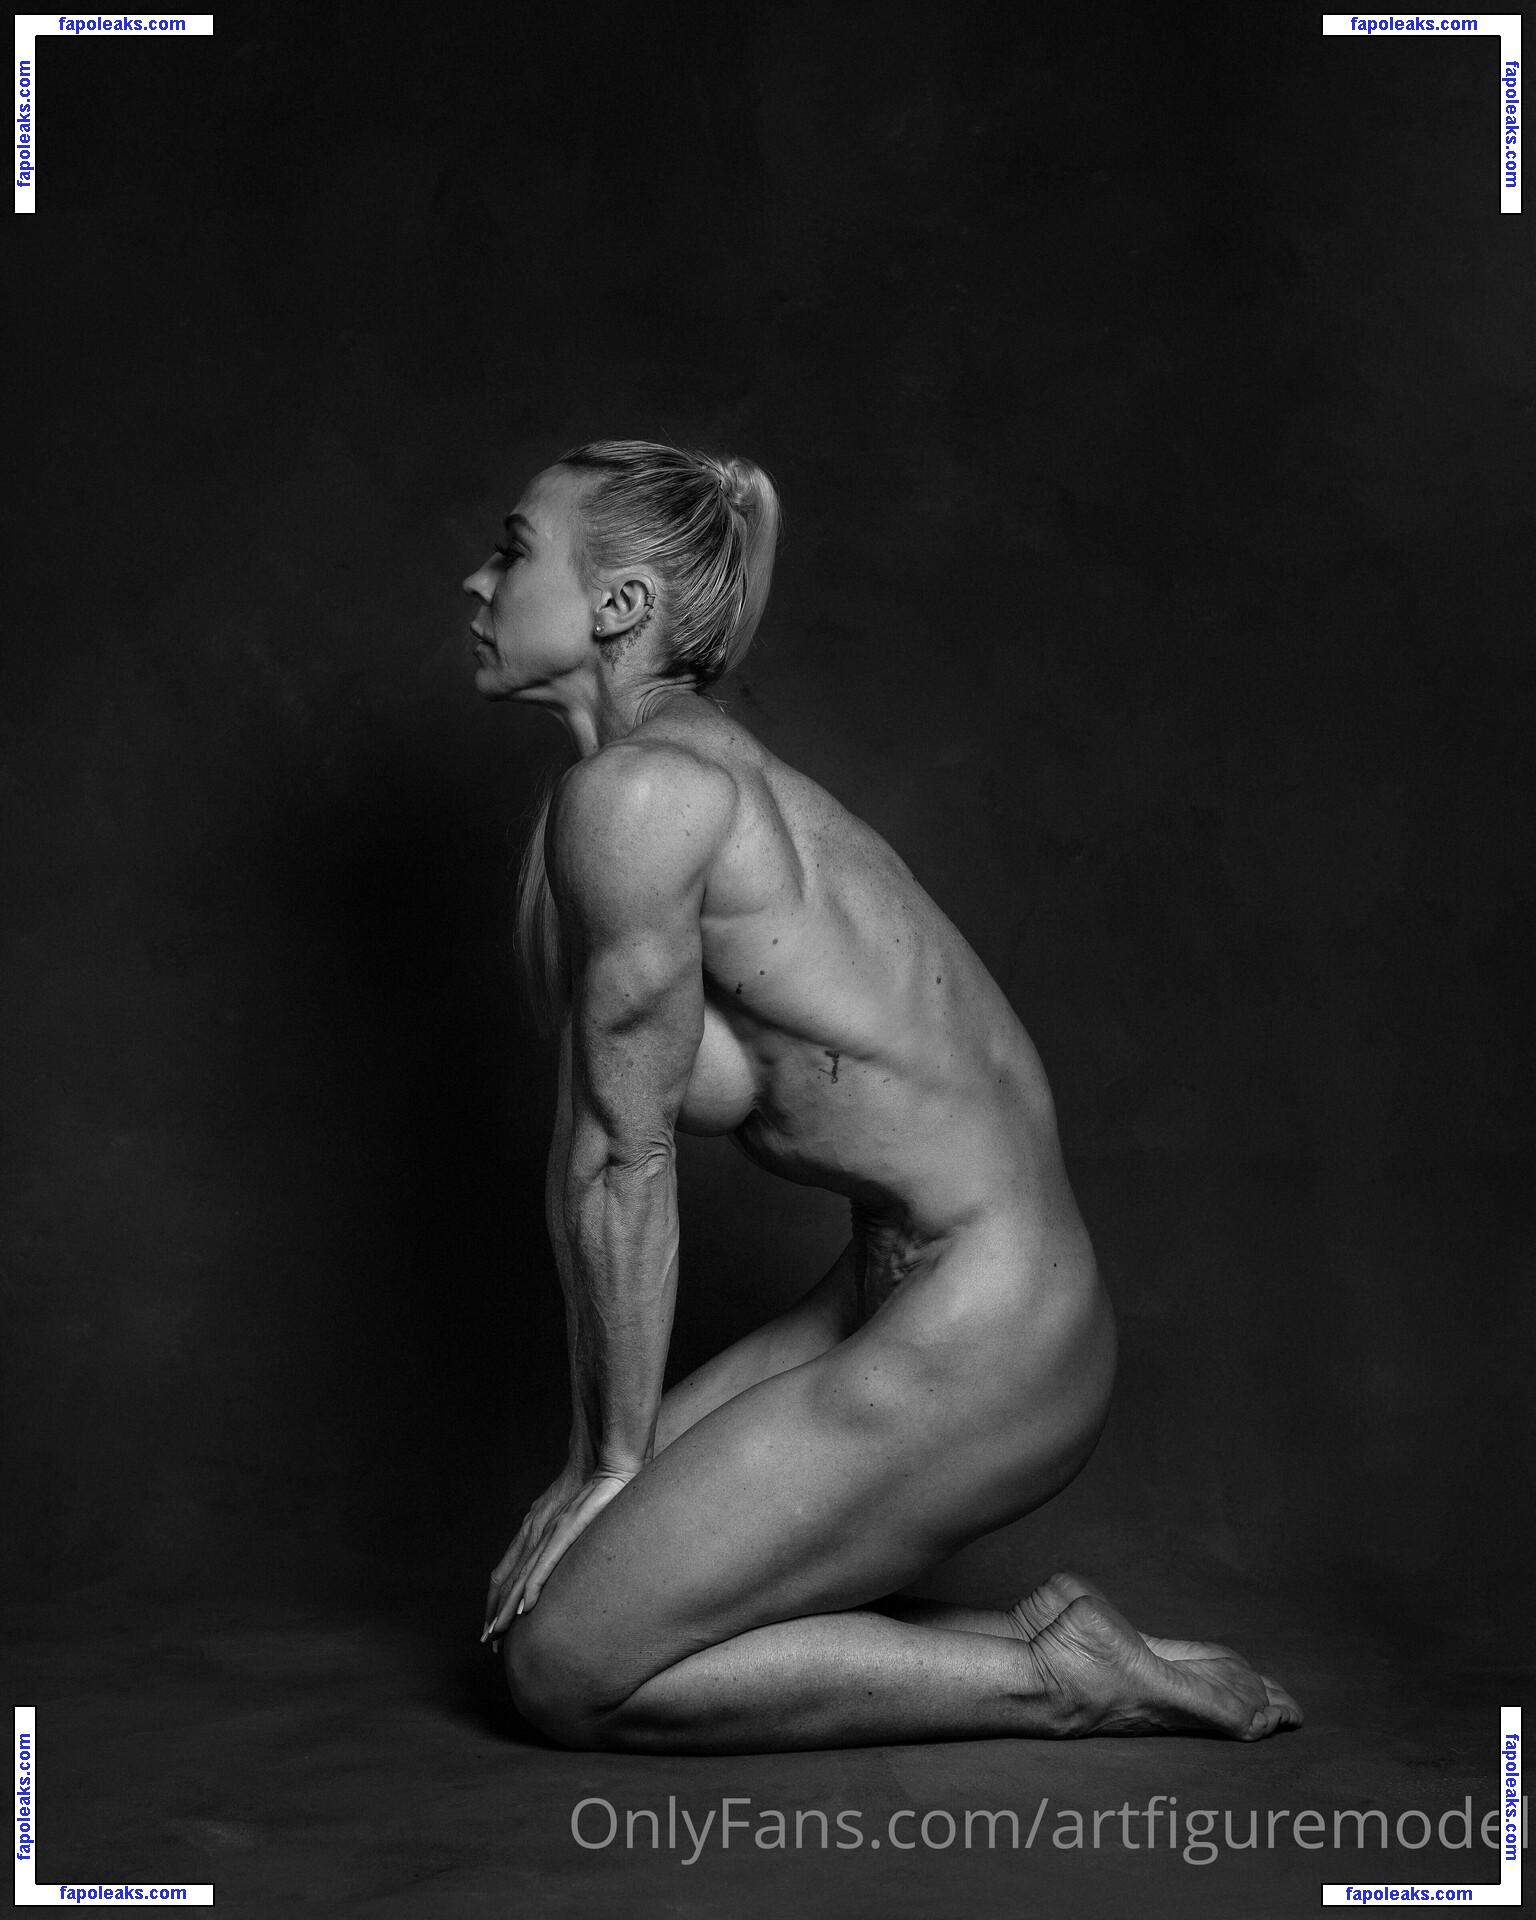 artfiguremodel / shodire nude photo #0011 from OnlyFans